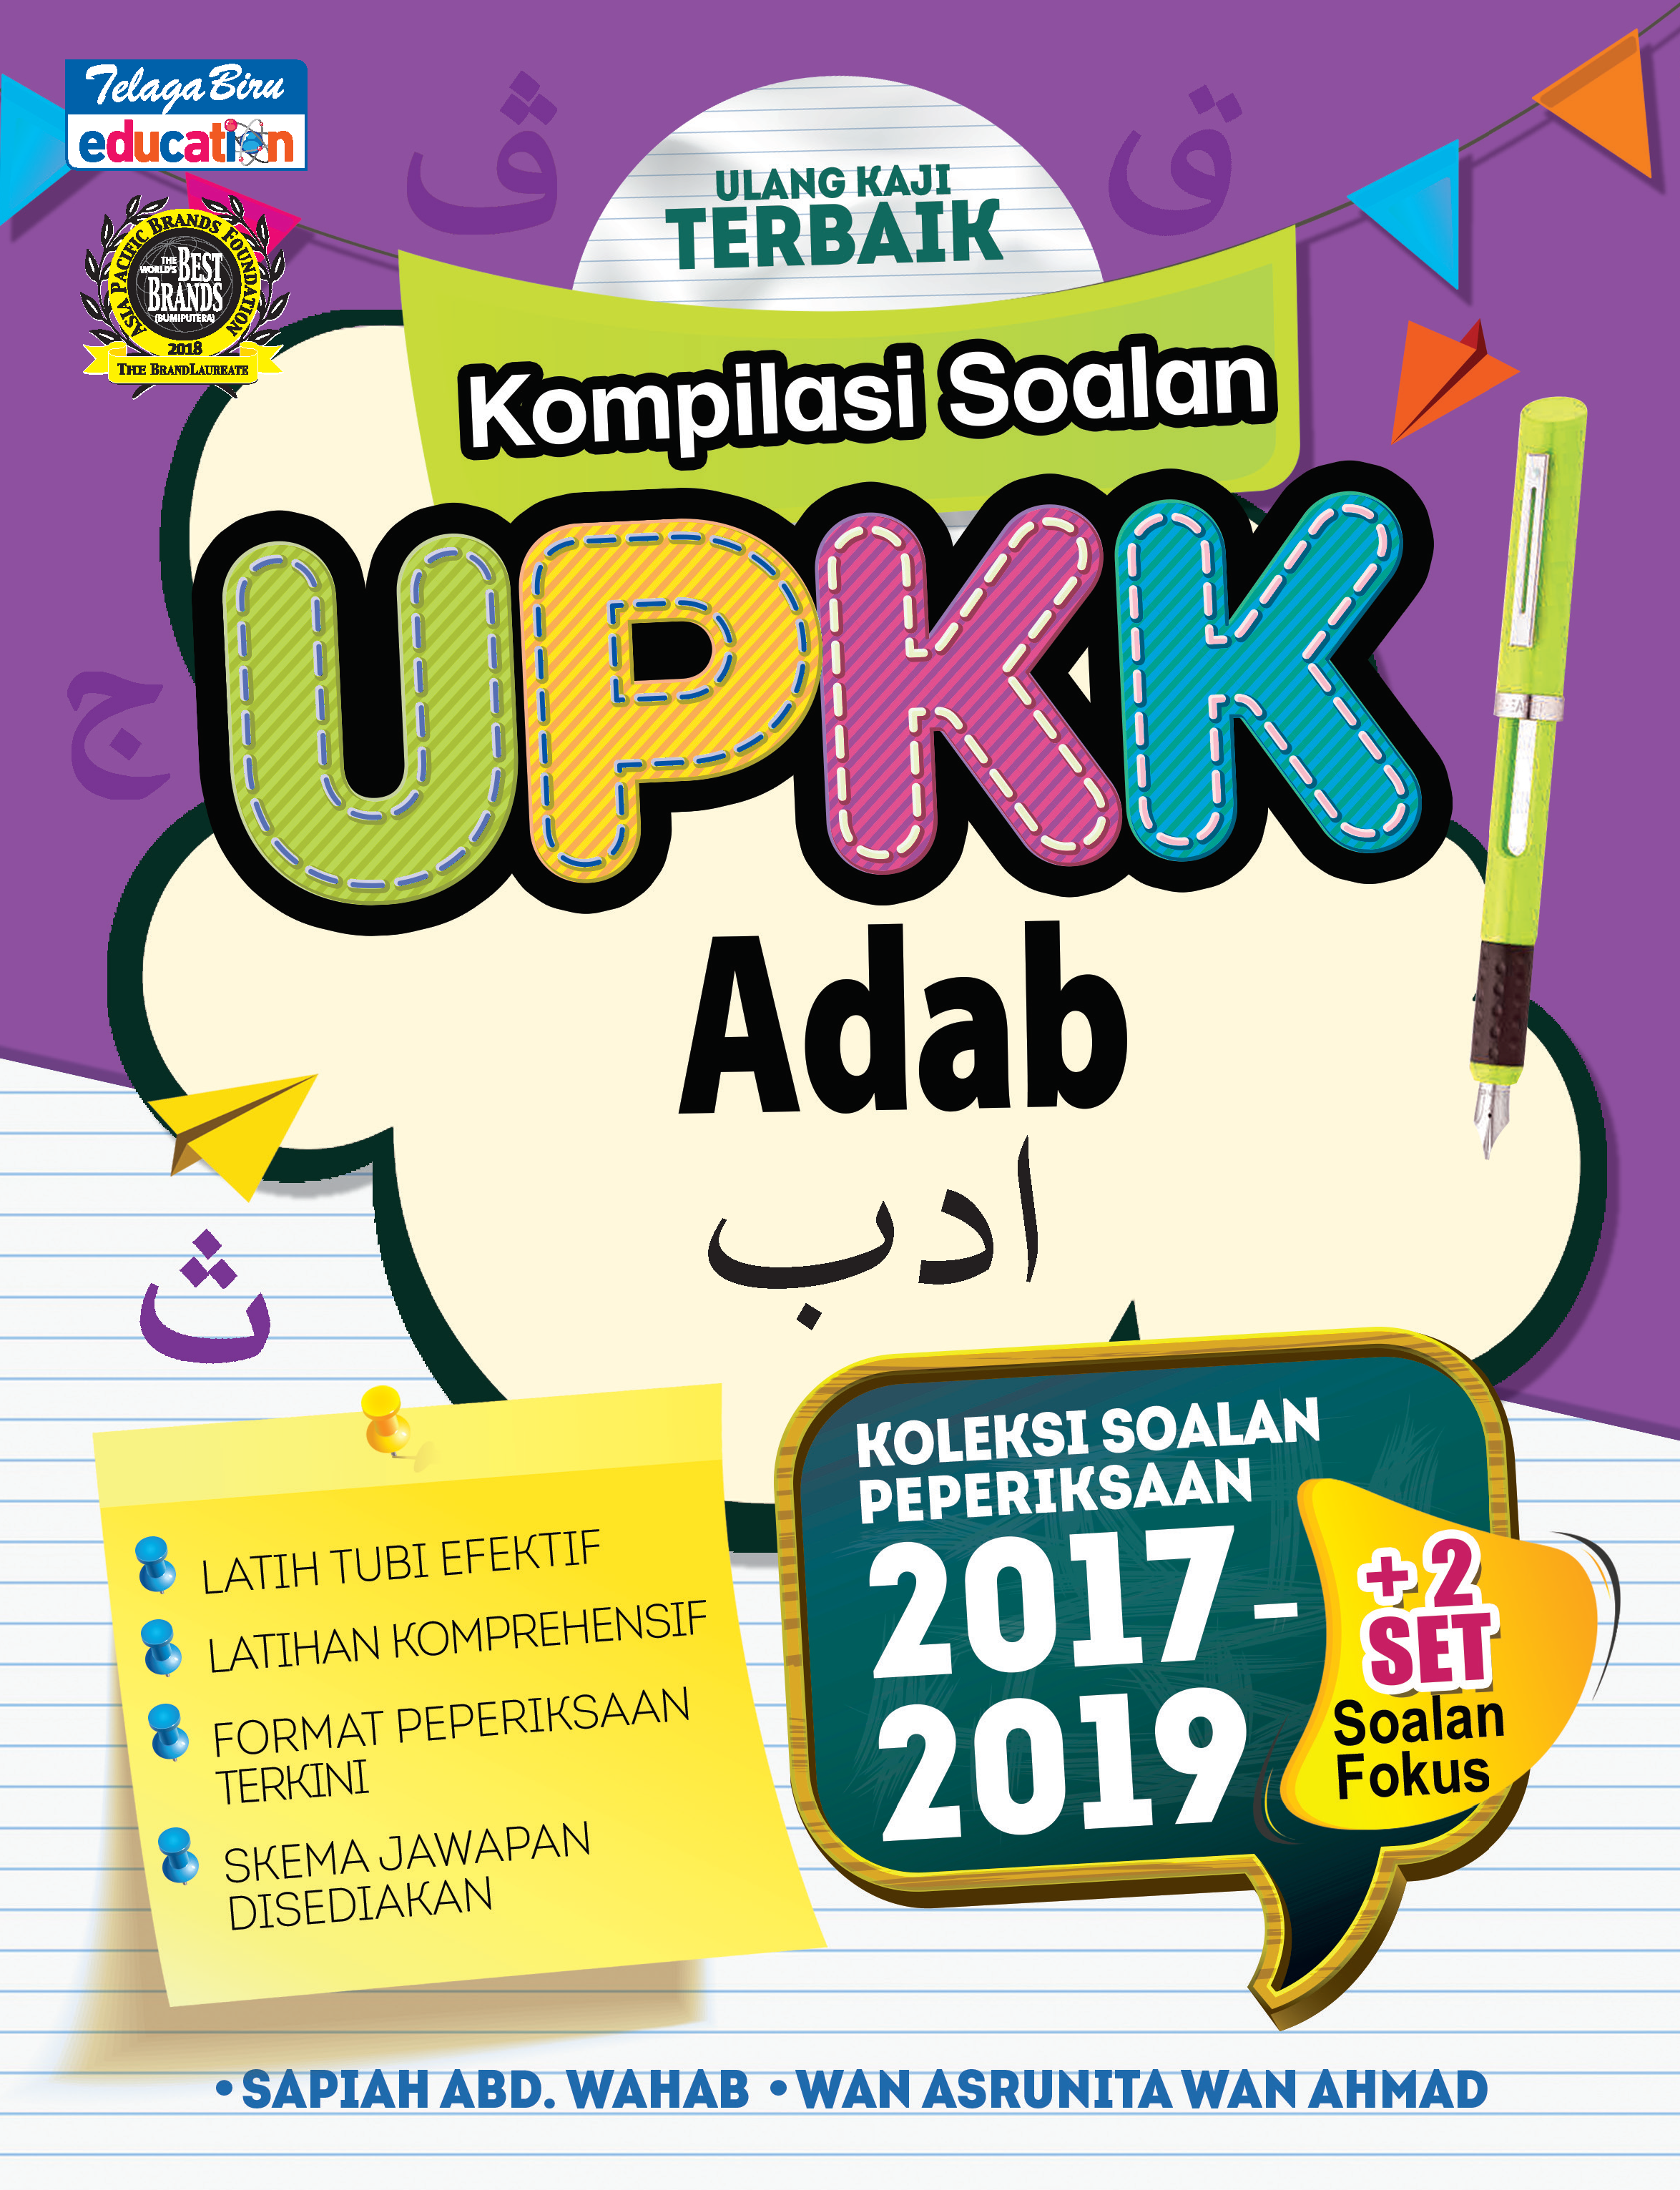 Kompilasi Soalan UPKK (Adab) - (TBBS1223)